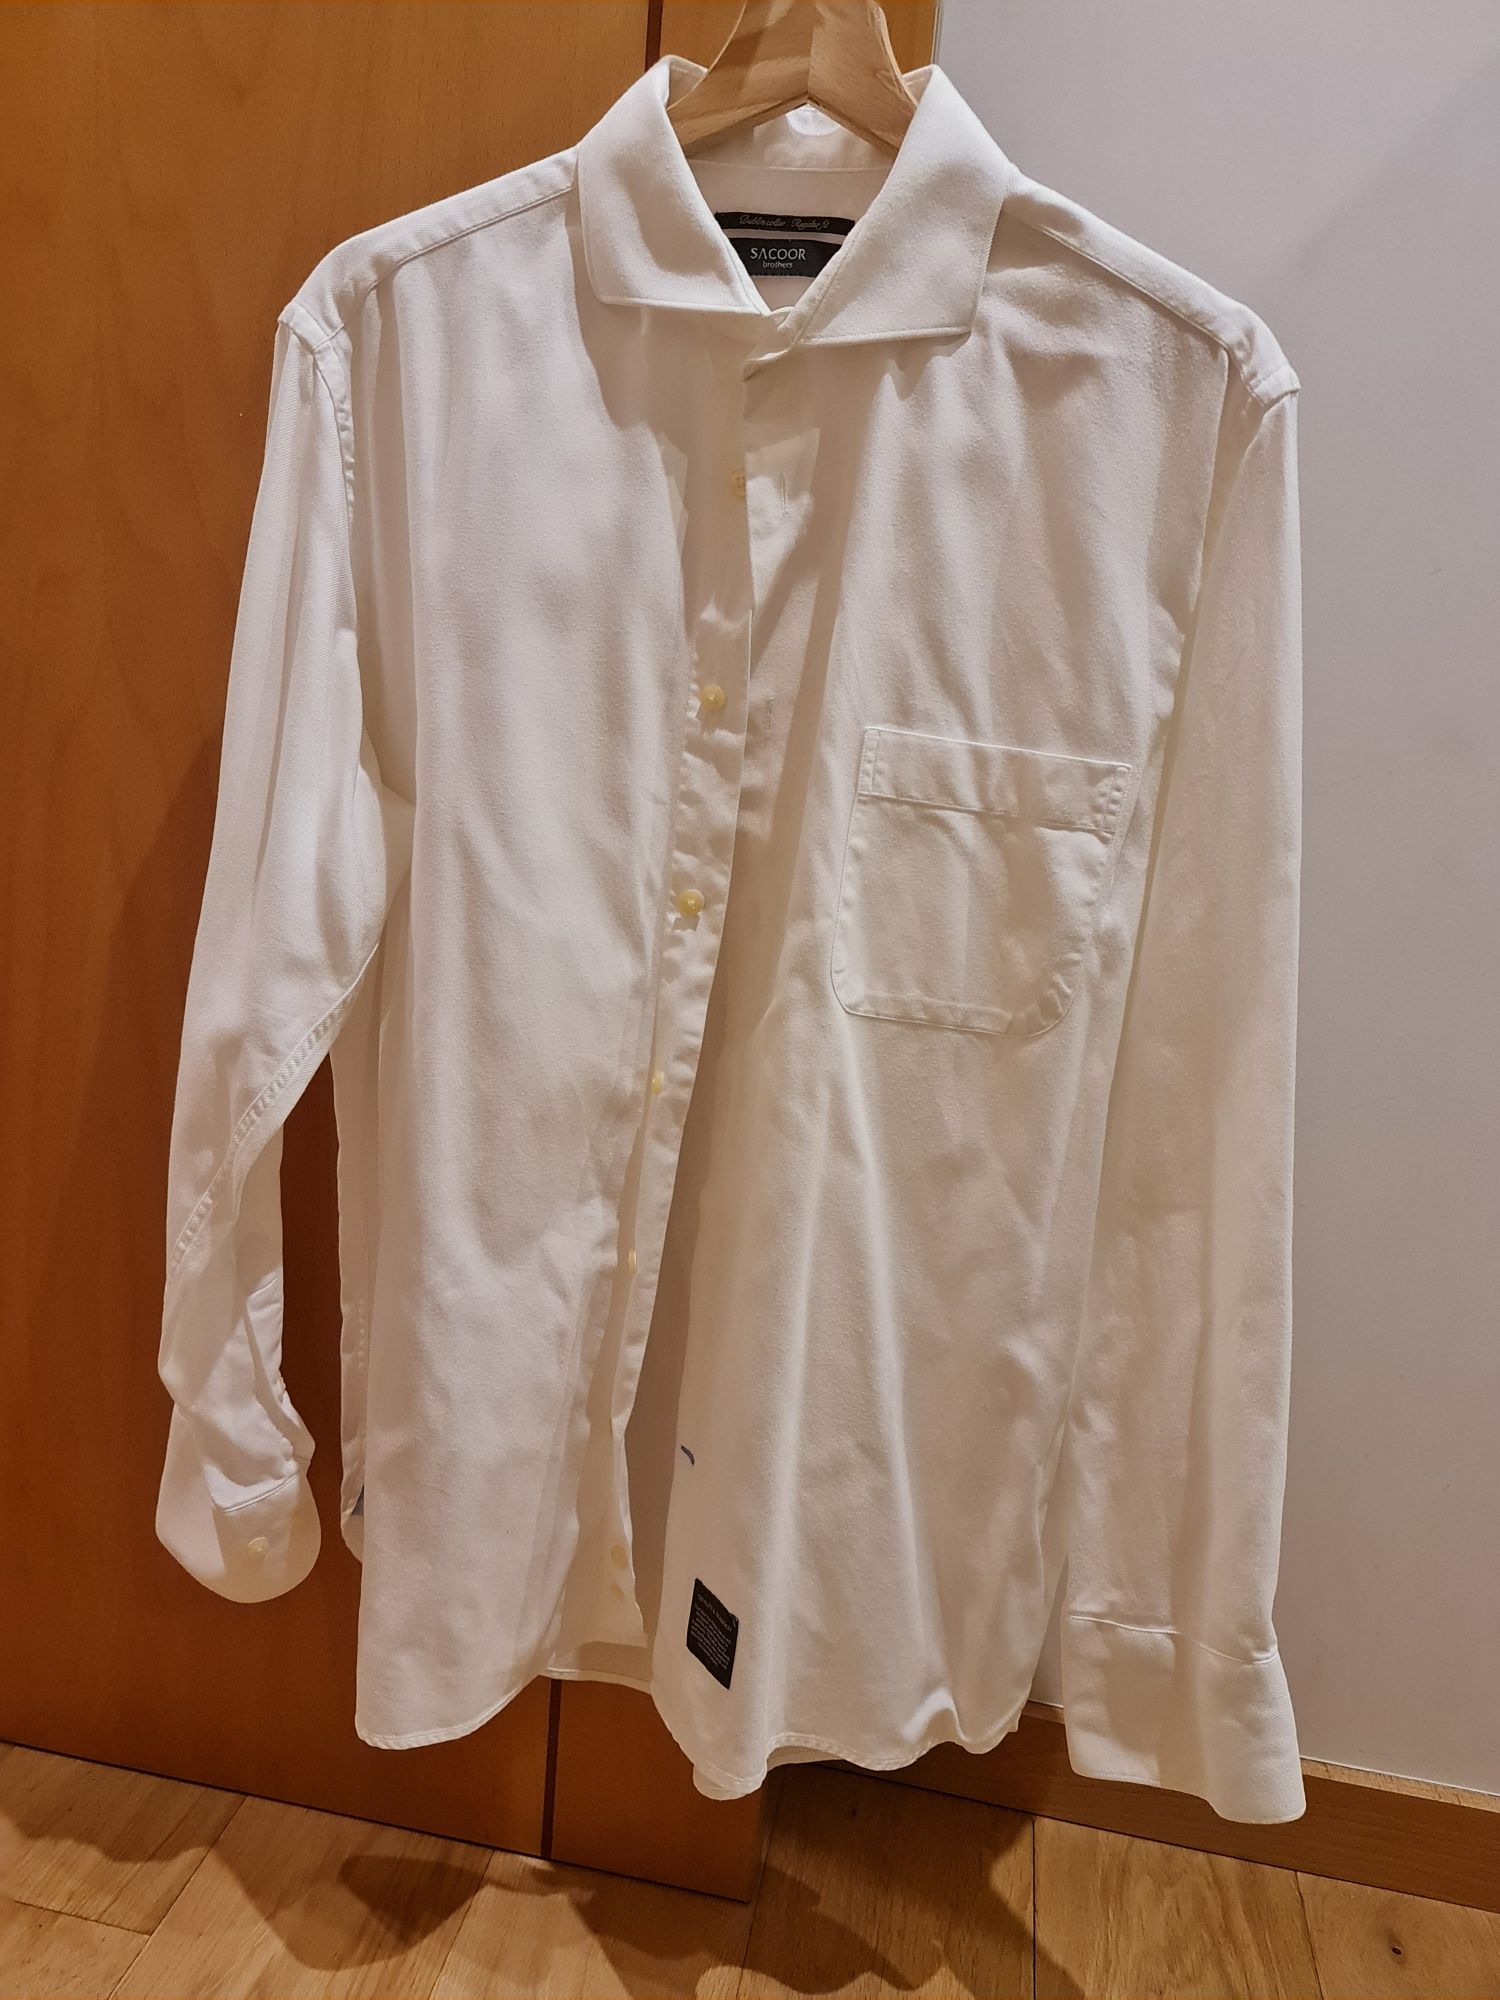 Camisa Branca Manga Comprida Sacoor